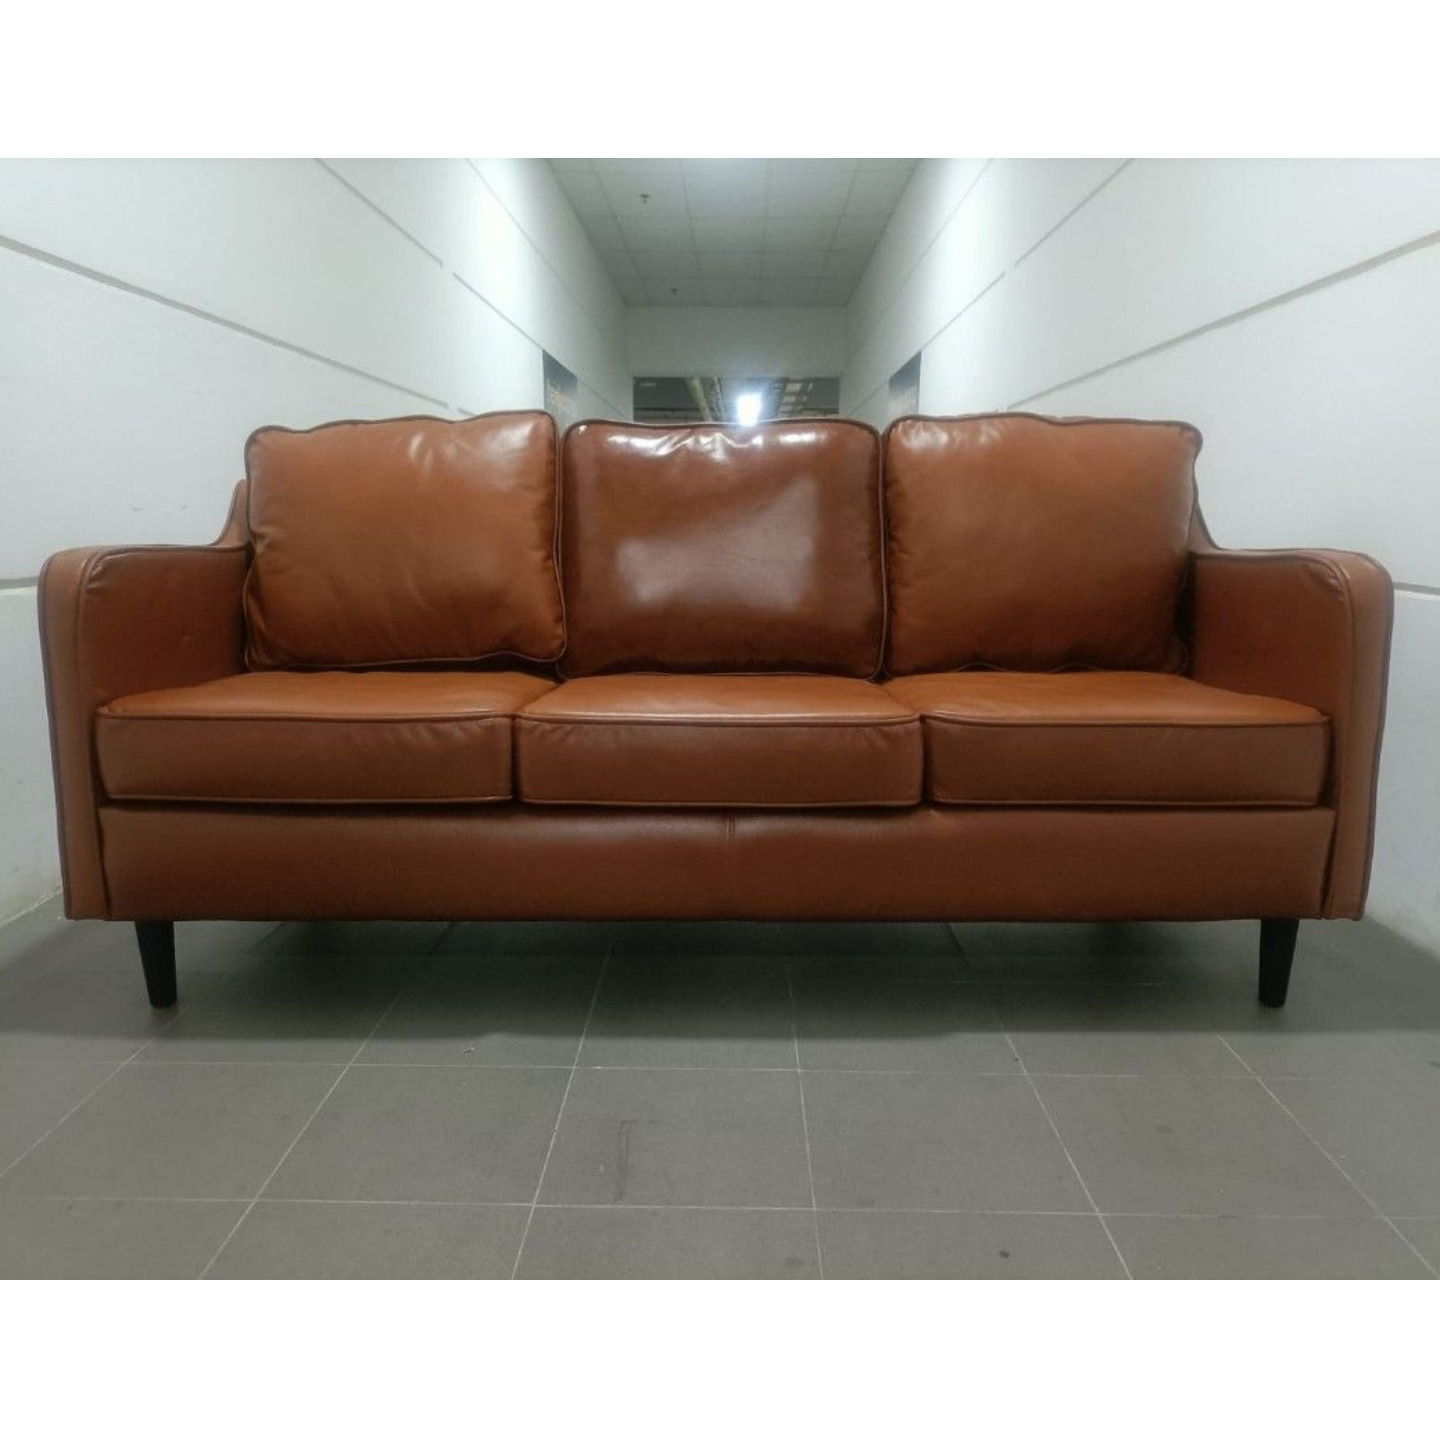 VALENTE Designs 3 Seater Sofa in BROWN GENUINE LEATHER